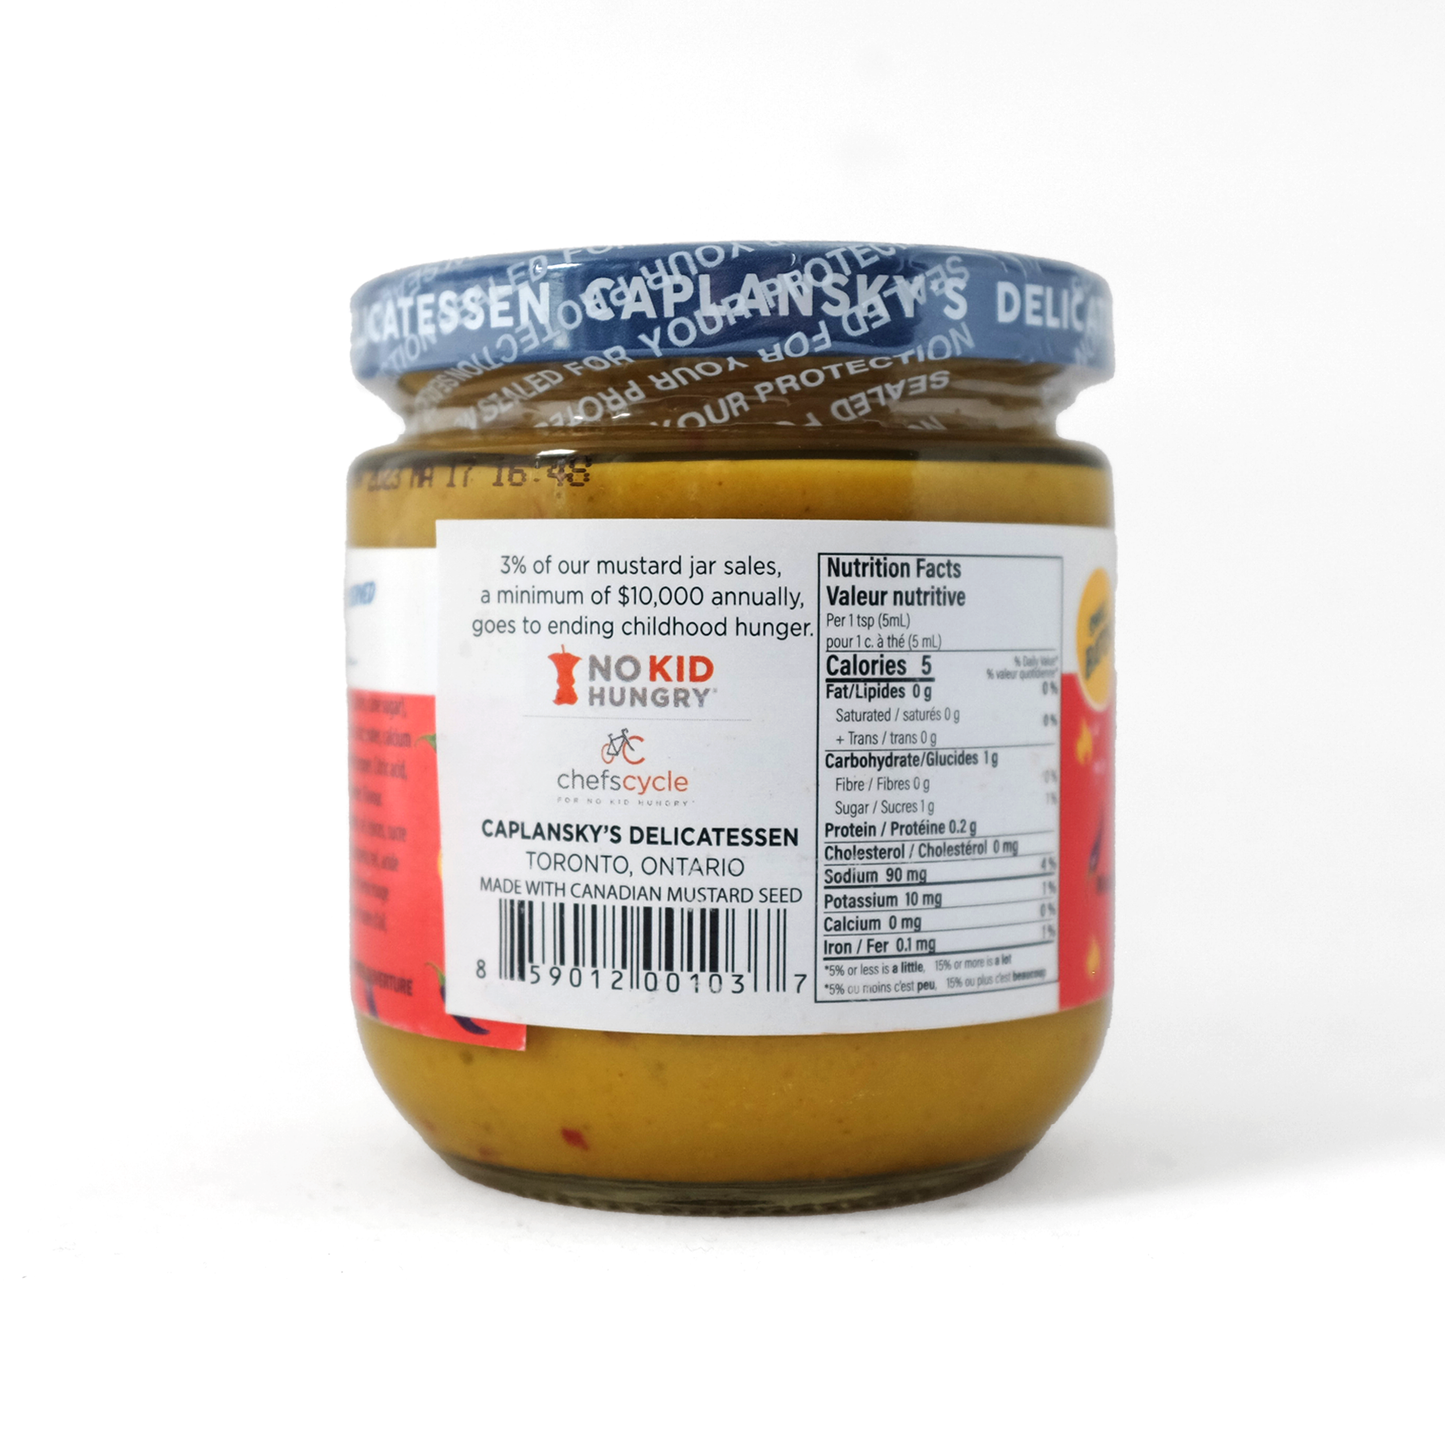 Caplansky's Deli Spicy Mustard 235 ml - 8 oz. jar